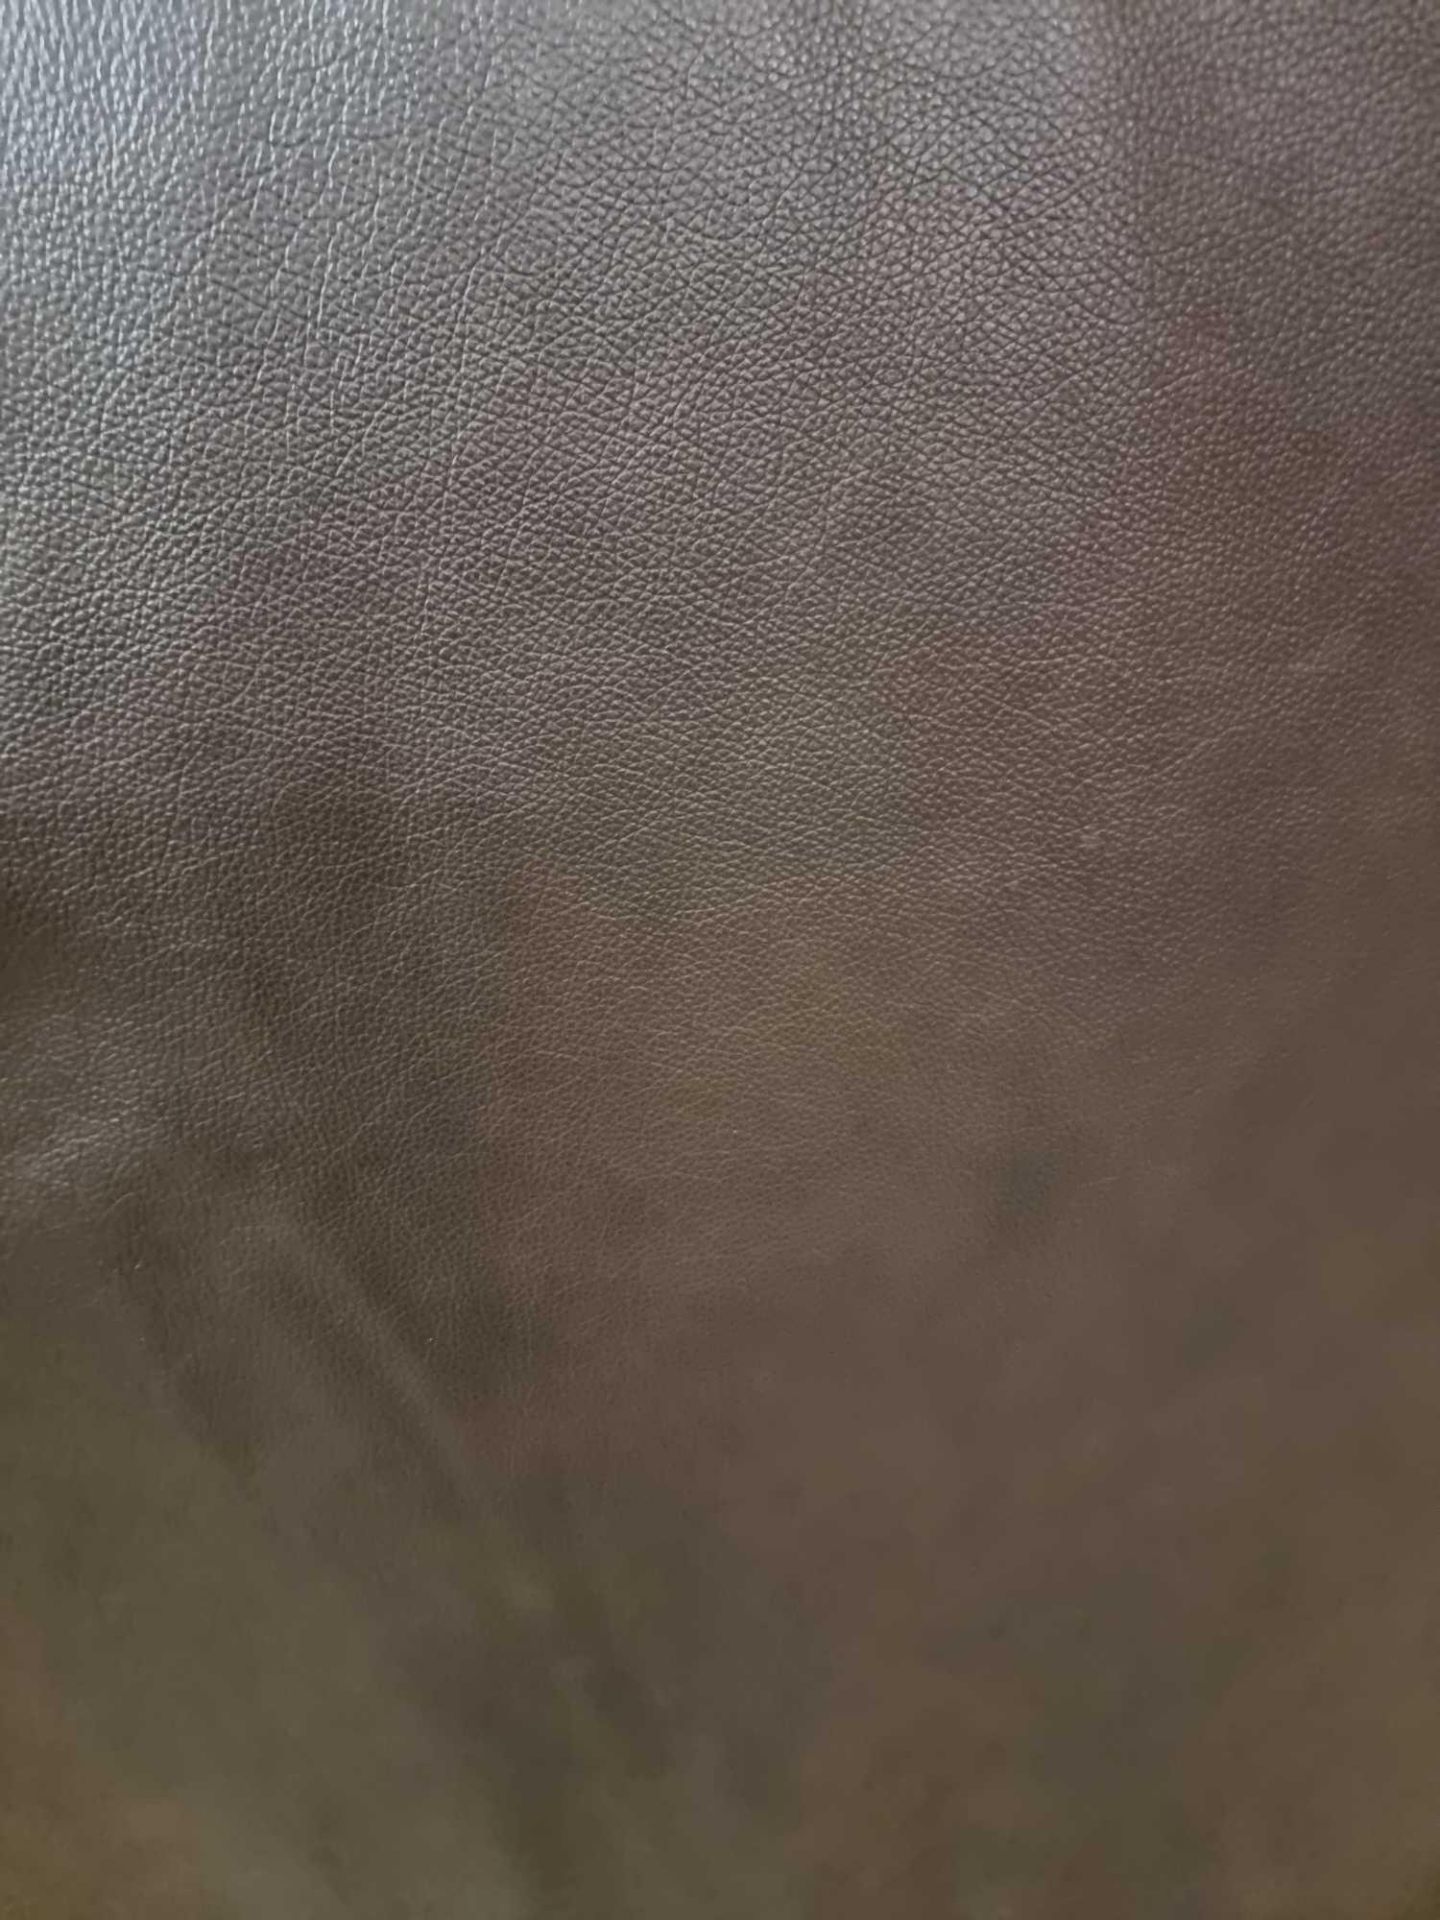 Mastrotto Hudson Chocolate Leather Hide approximately 5mÂ² 2.5 x 2cm - Bild 2 aus 3